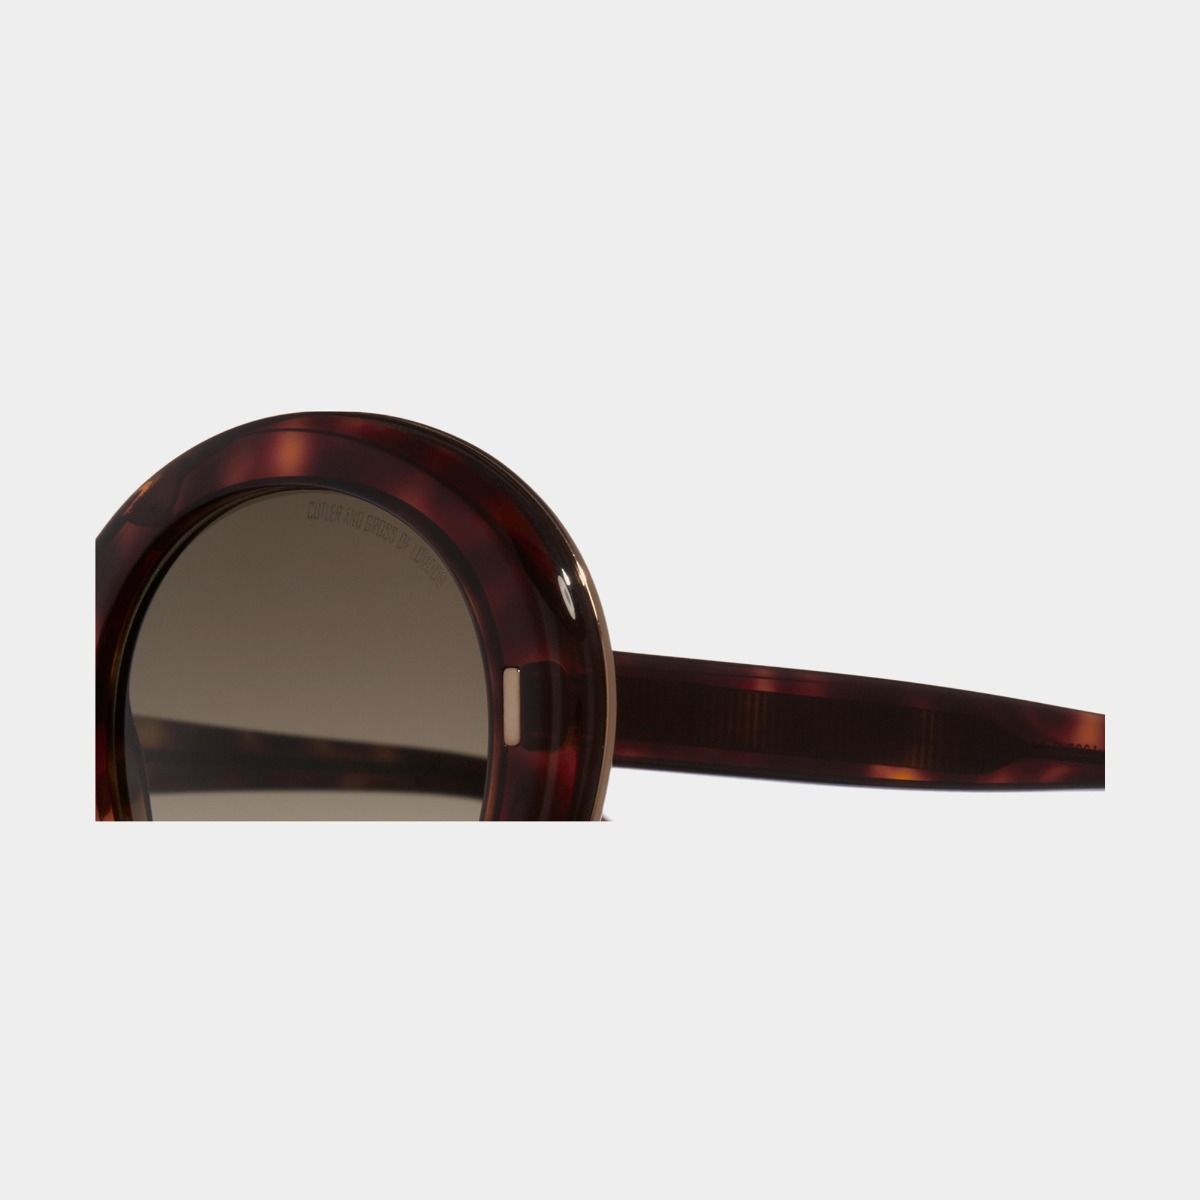 1327 Oversize Round Sunglasses-Dark Turtle